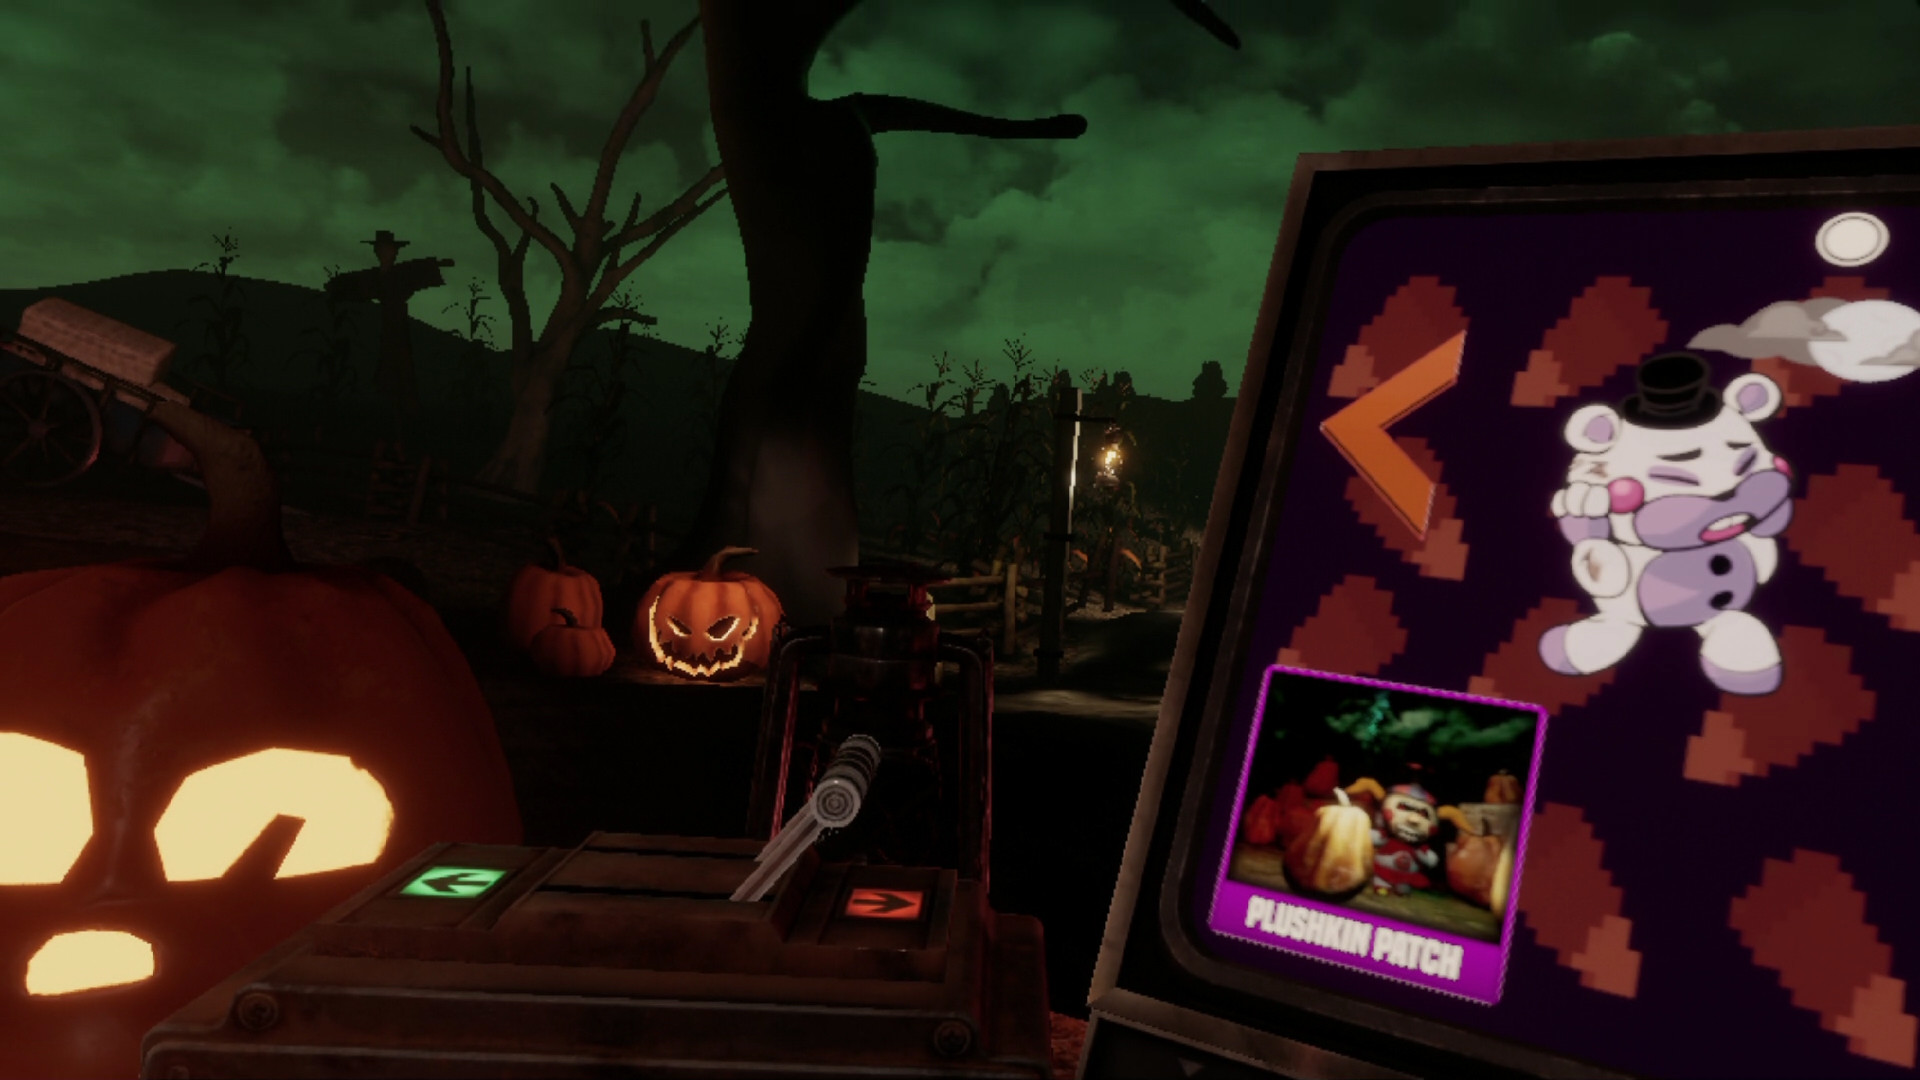 presse Menneskelige race Diskant Five Nights at Freddy's: Help Wanted - Curse of Dreadbear on Steam